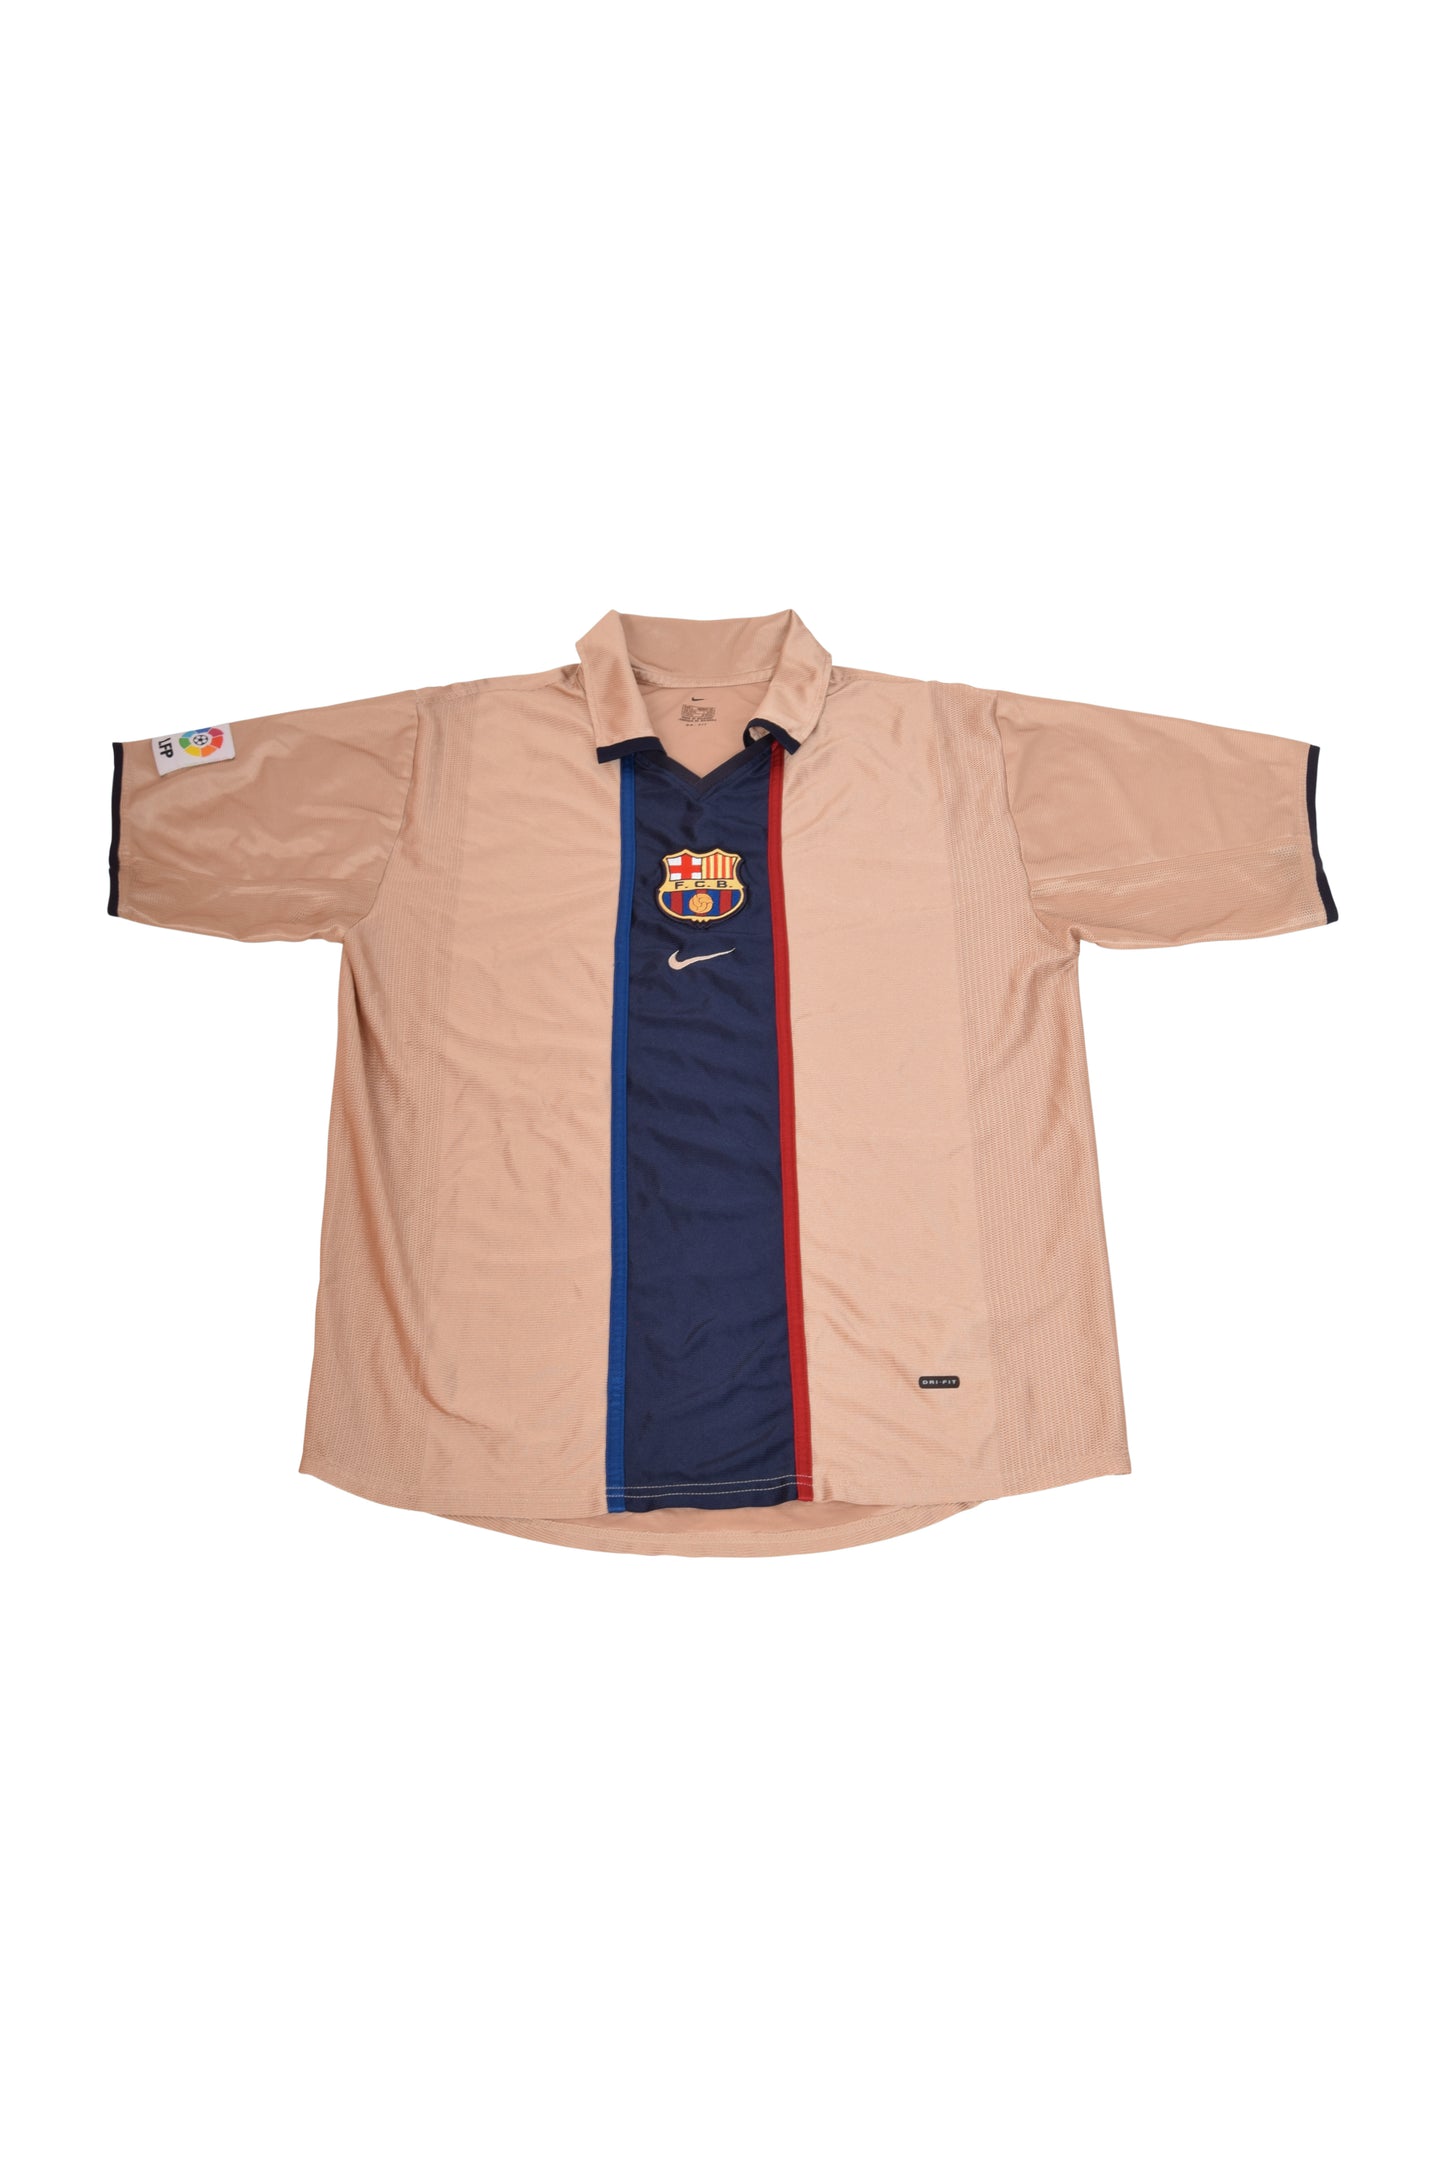 FC Barcelona Nike Away Football Shirt 2001-2002 Golden Blue Size L Dri Fit